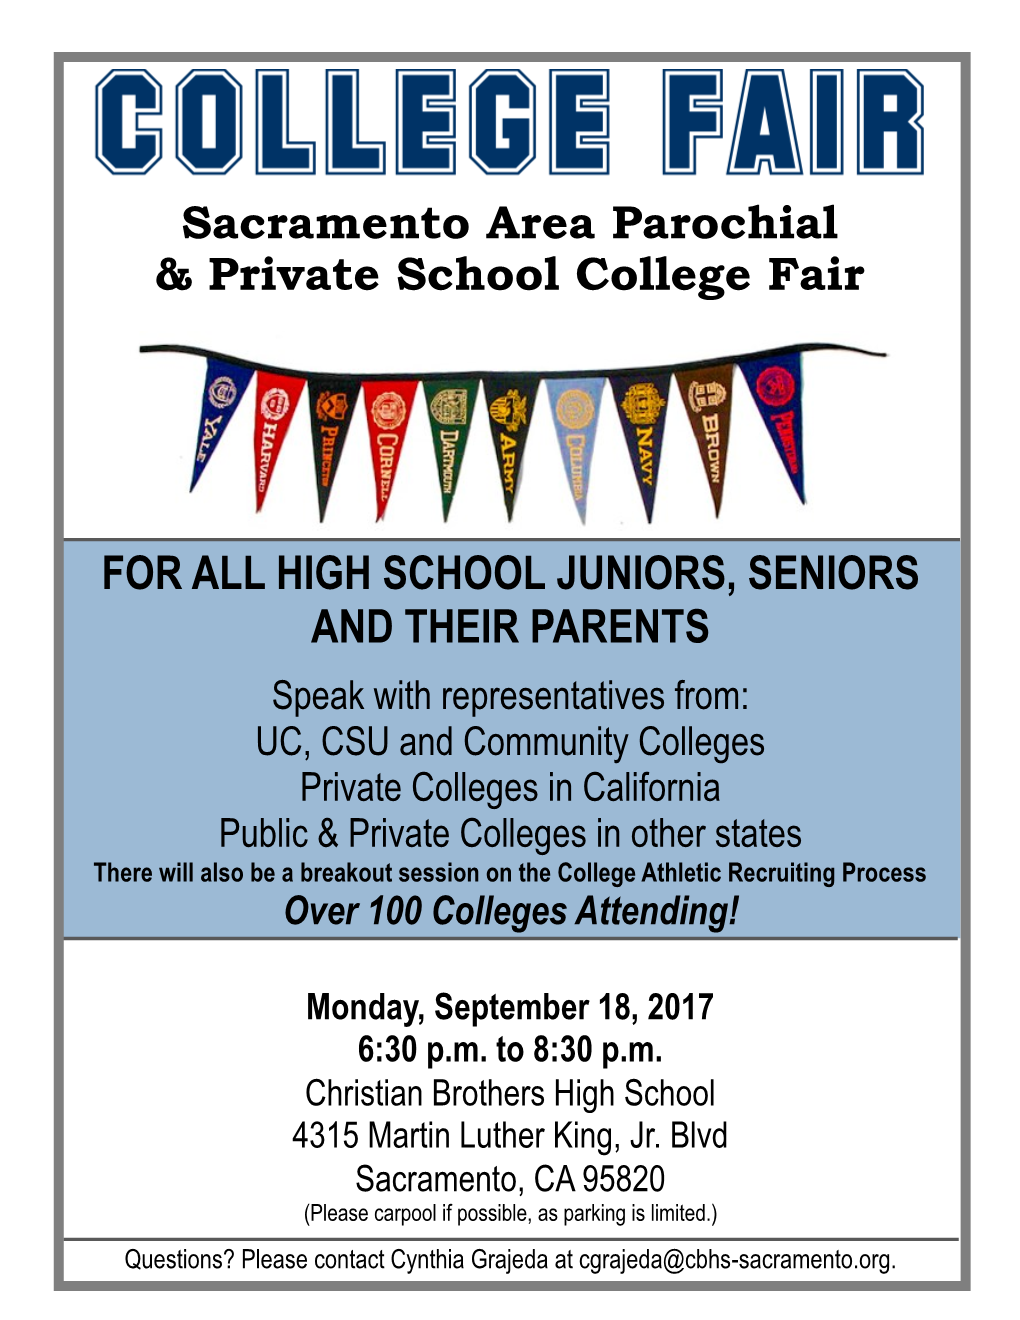 Sacramento Area Parochial & Private School College Fair for ALL HIGH SCHOOL JUNIORS, SENIORS and THEIR PARENTS